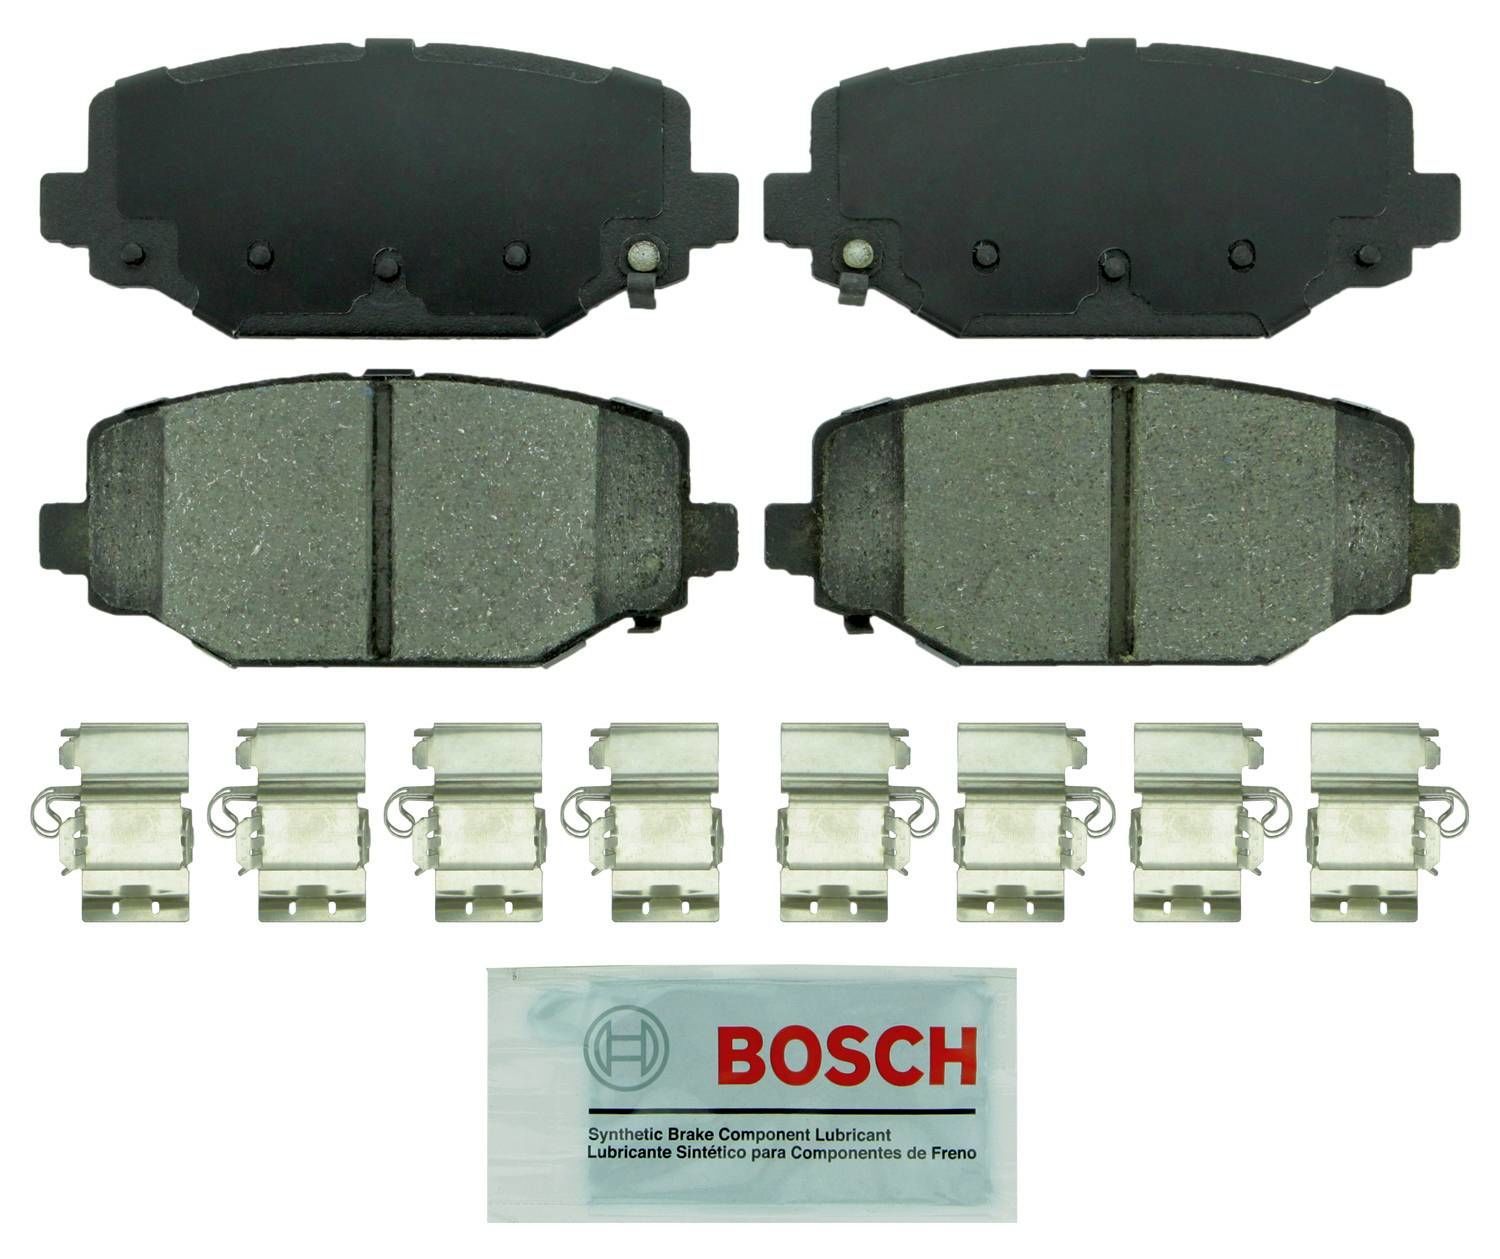 BOSCH BRAKE - Bosch Blue Ceramic Brake Pads with Hardware (Rear) - BQC BE1596H